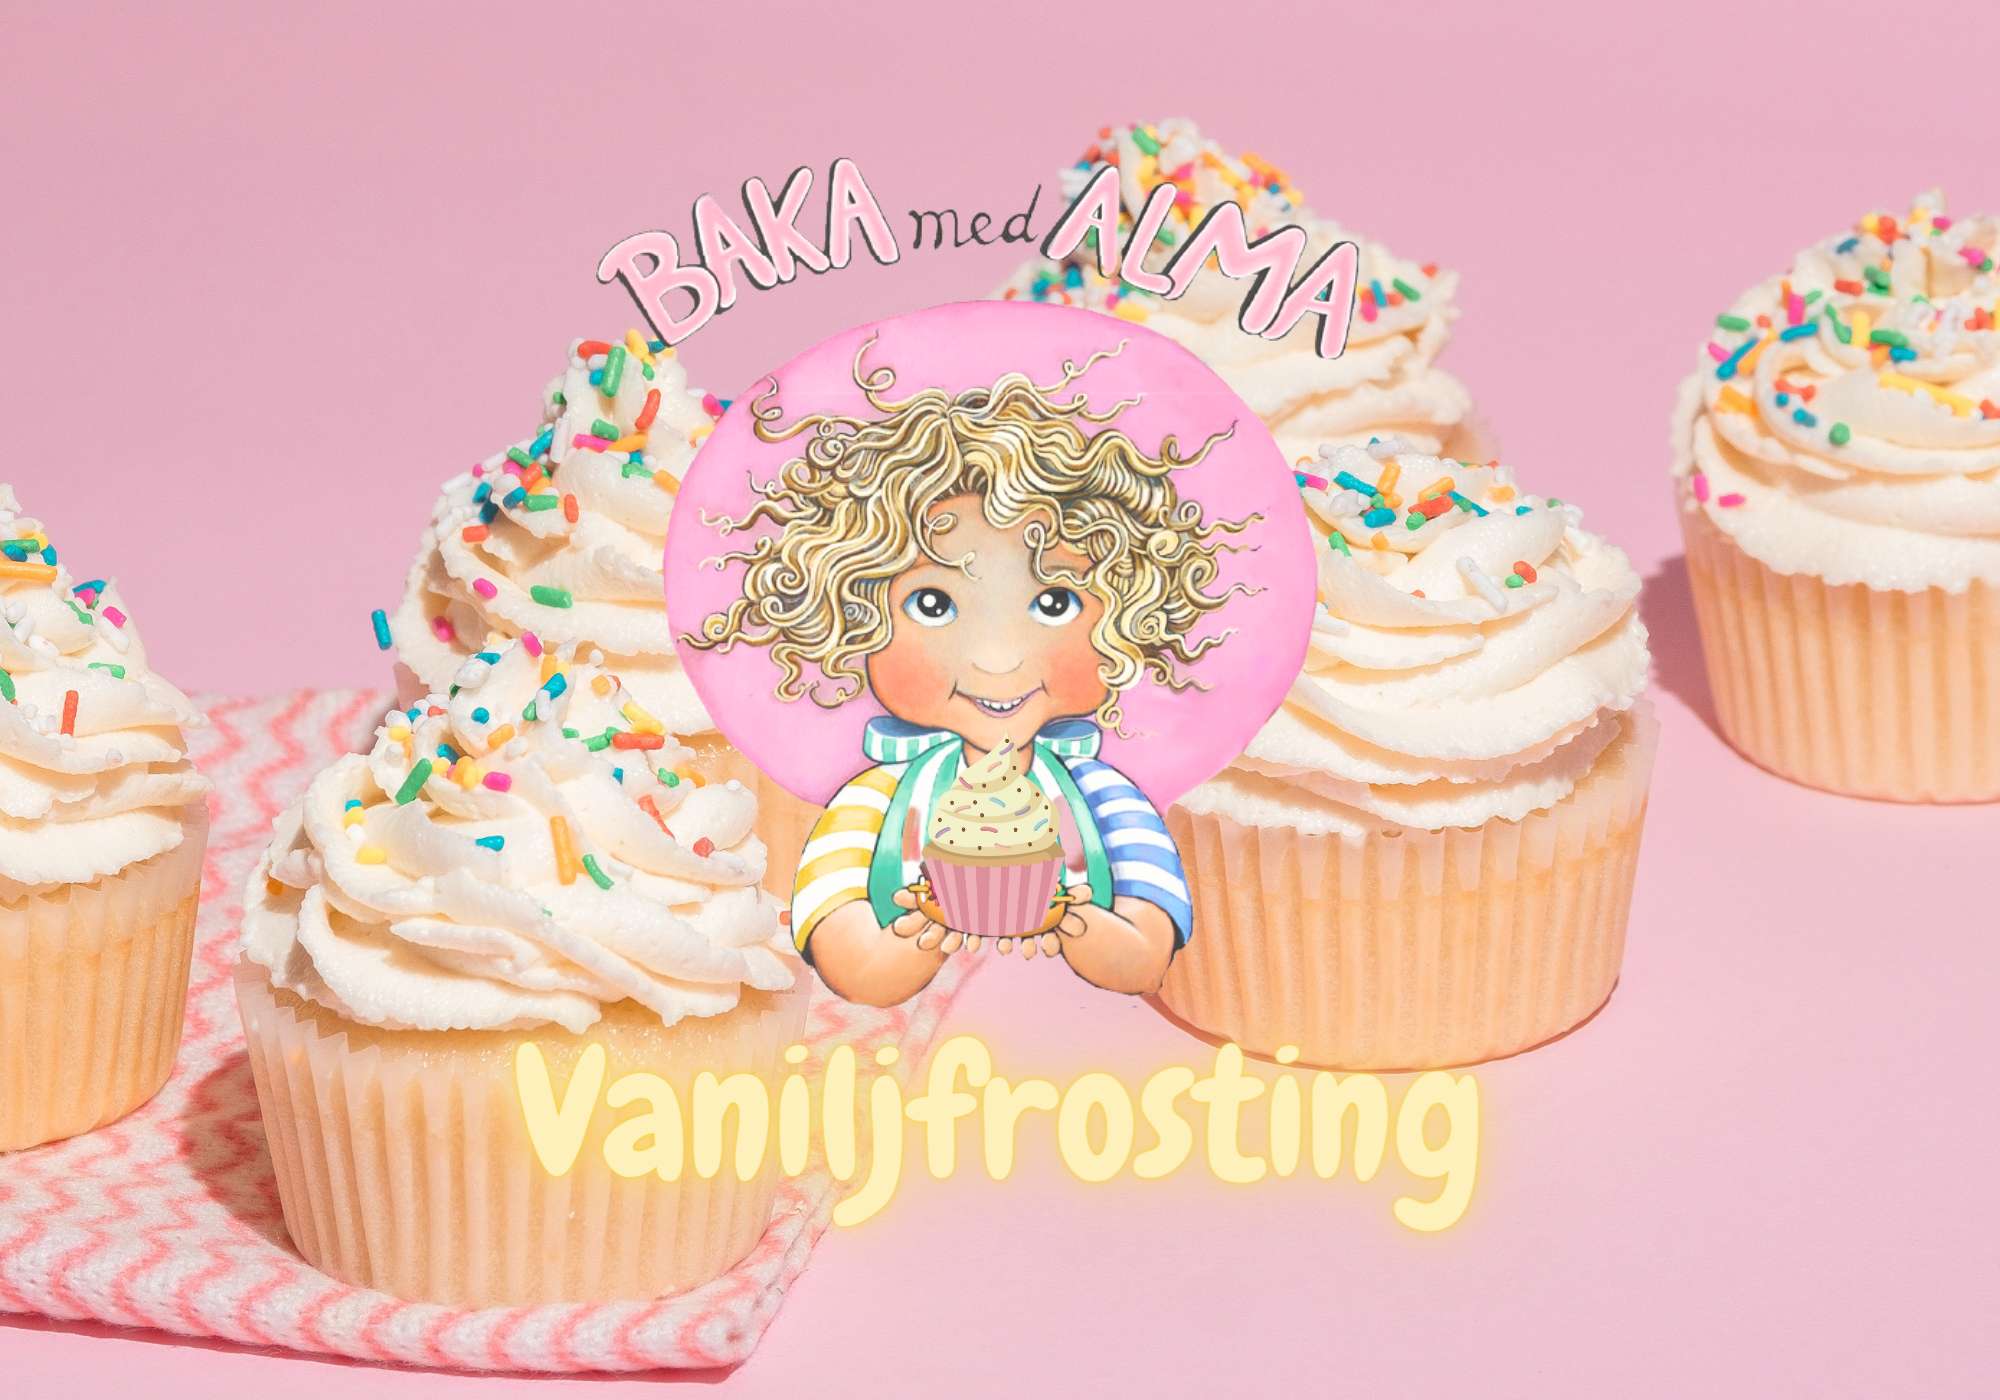 Frosting Vanilj - nedladdningsbar - Pdf - Baka med Alma